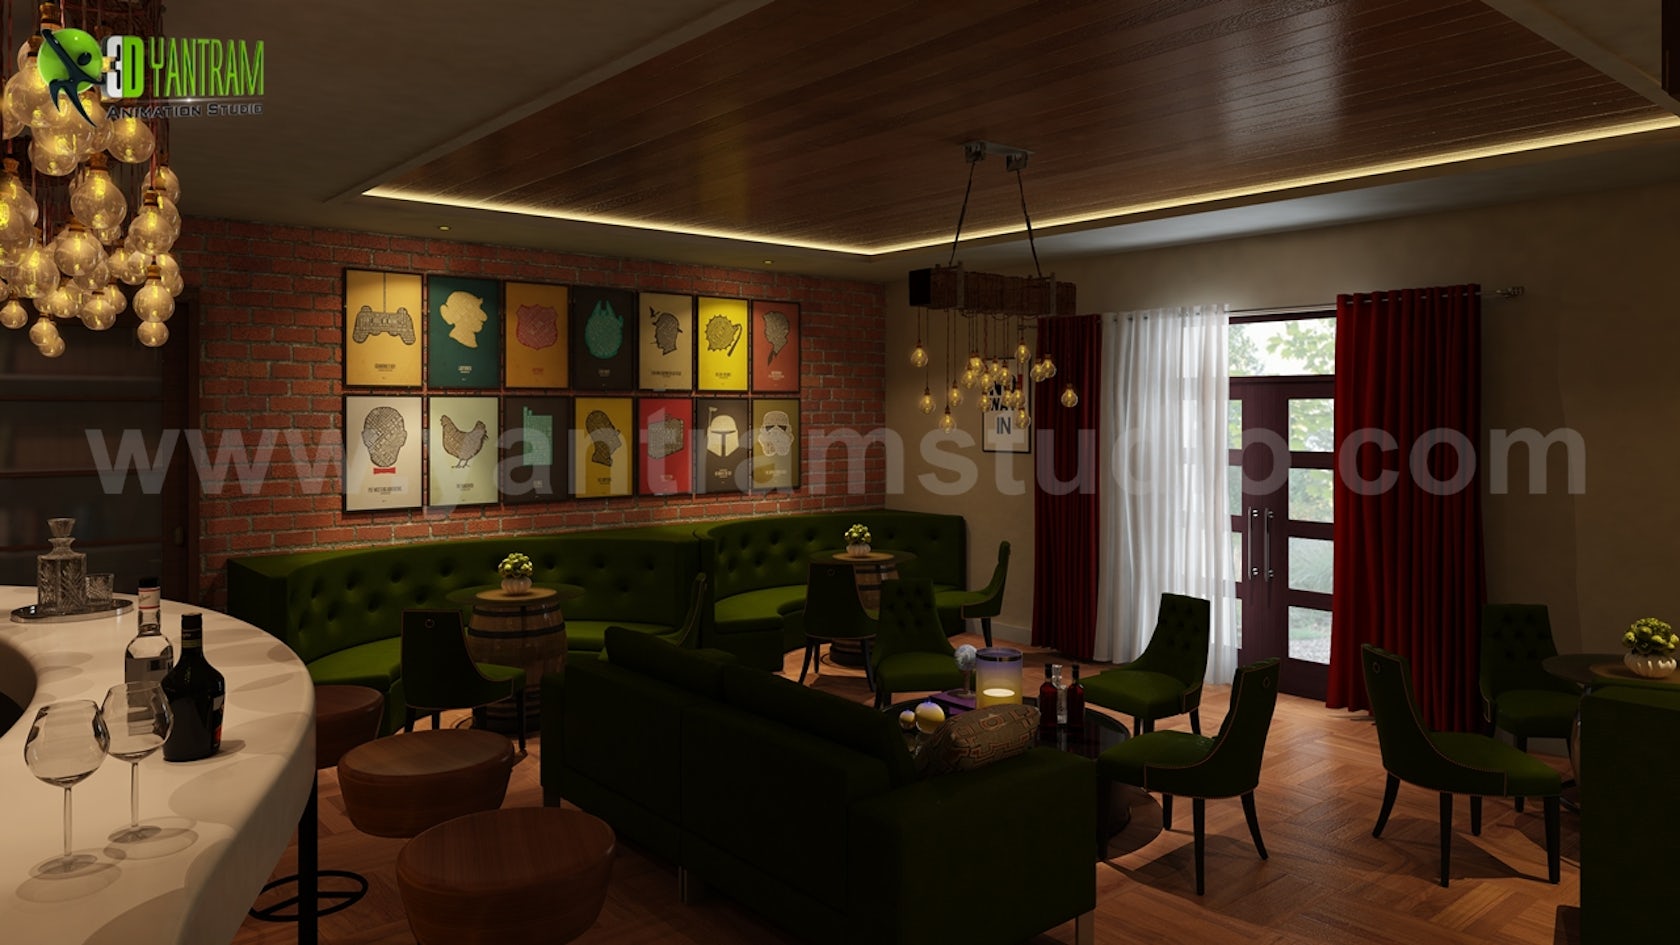 Bar Restaurant Interior Design By Yantram 3d Interior